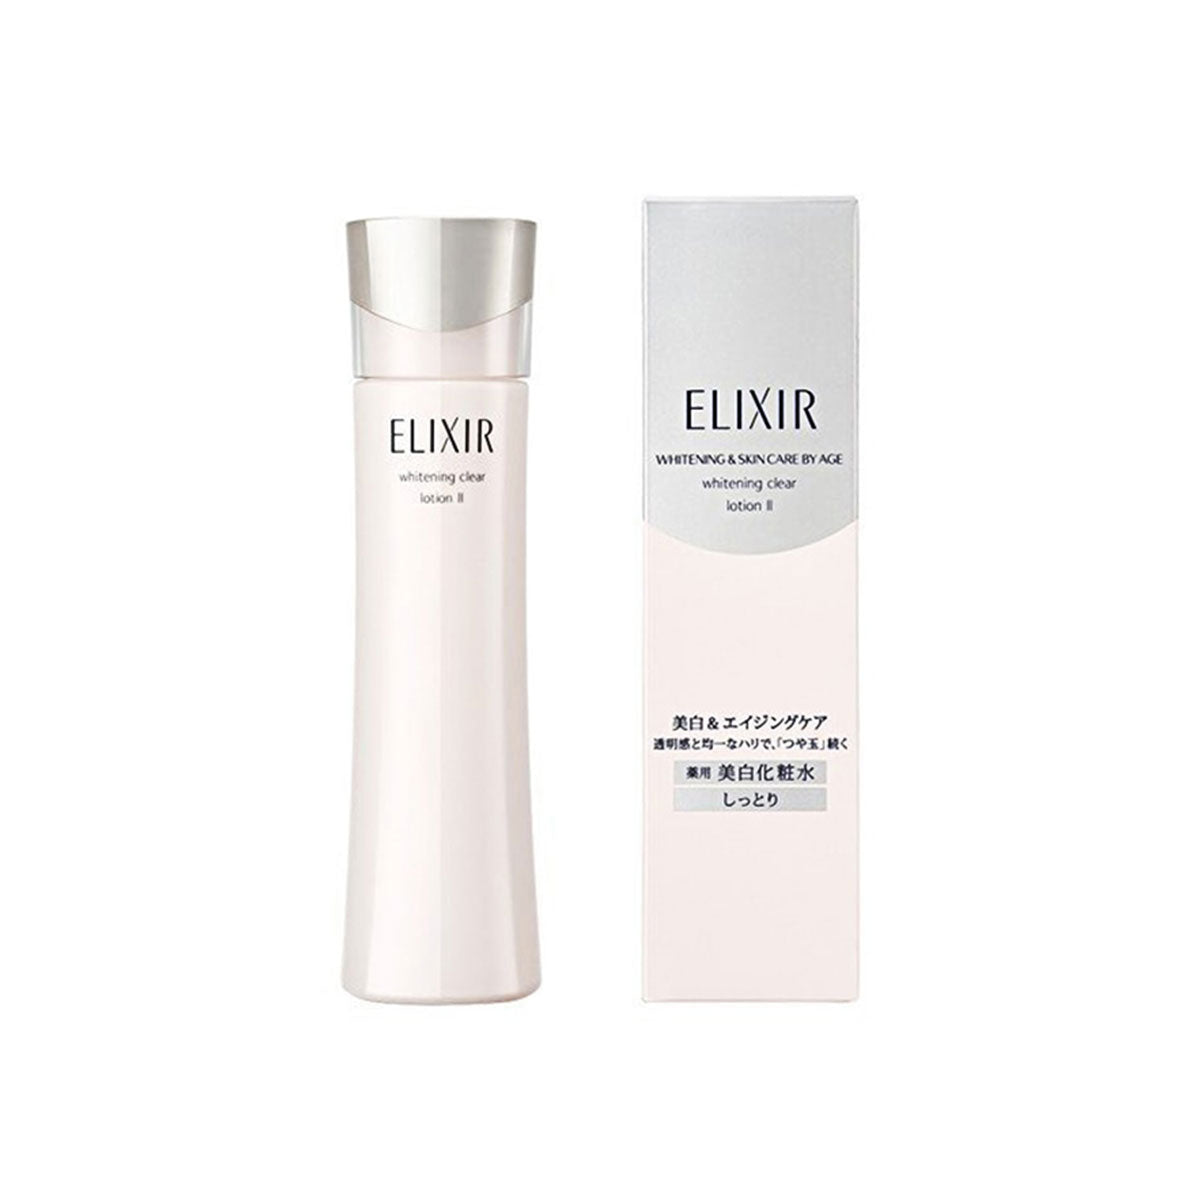 Elixir怡丽丝尔 纯肌净白晶润化妆水 #II 适合混合型肌肤